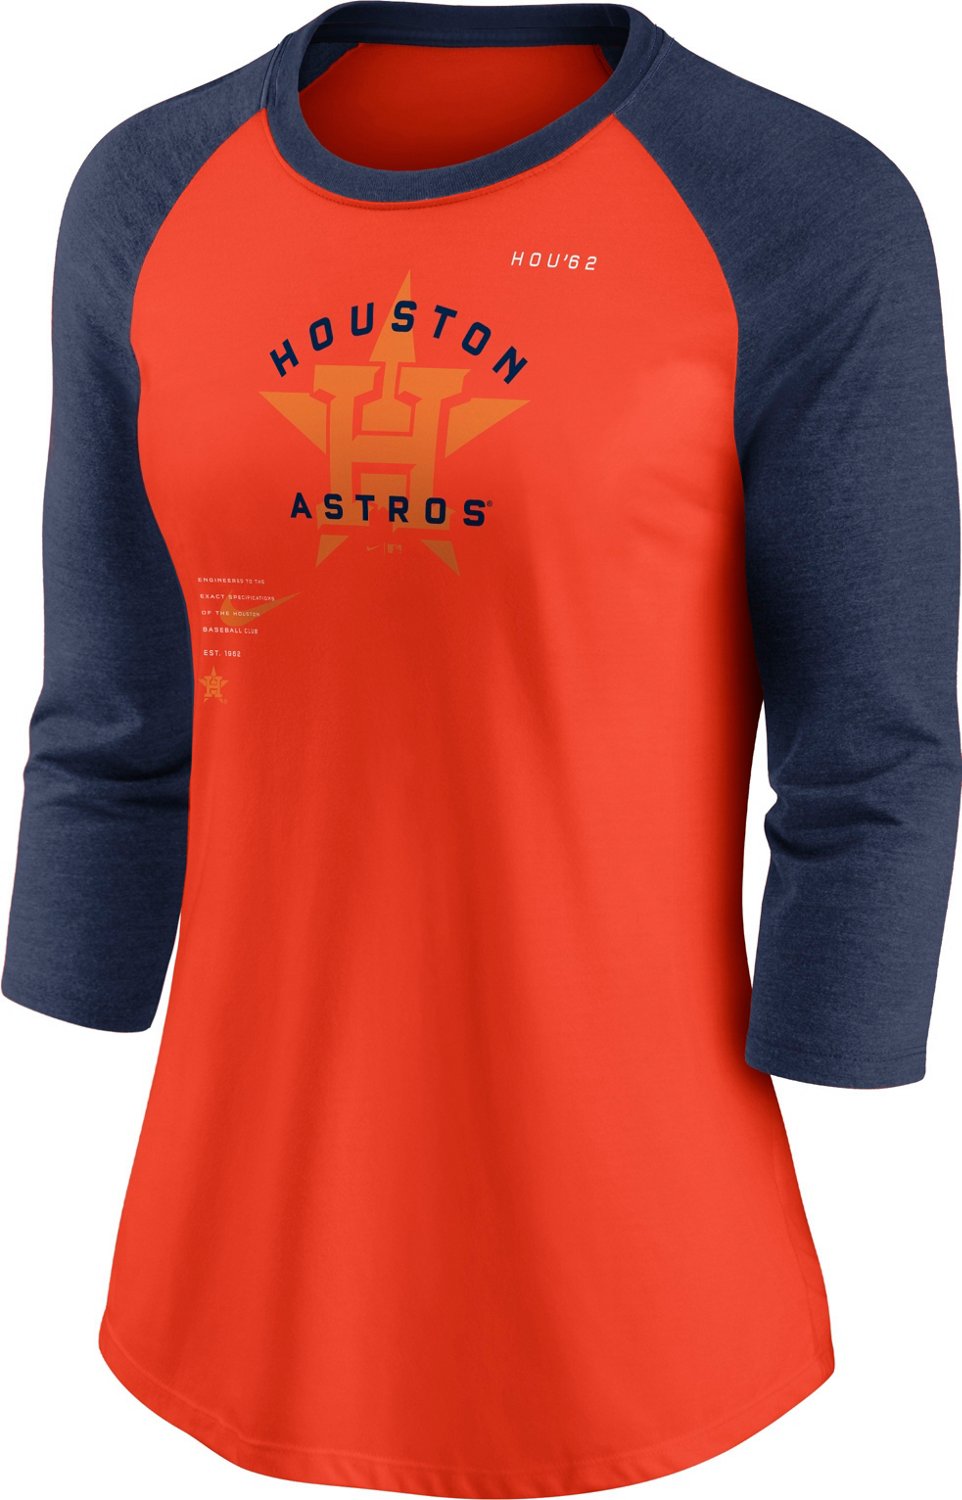 Nike Women's Houston Astros Next Up 3/4 Sleeve Raglan Top